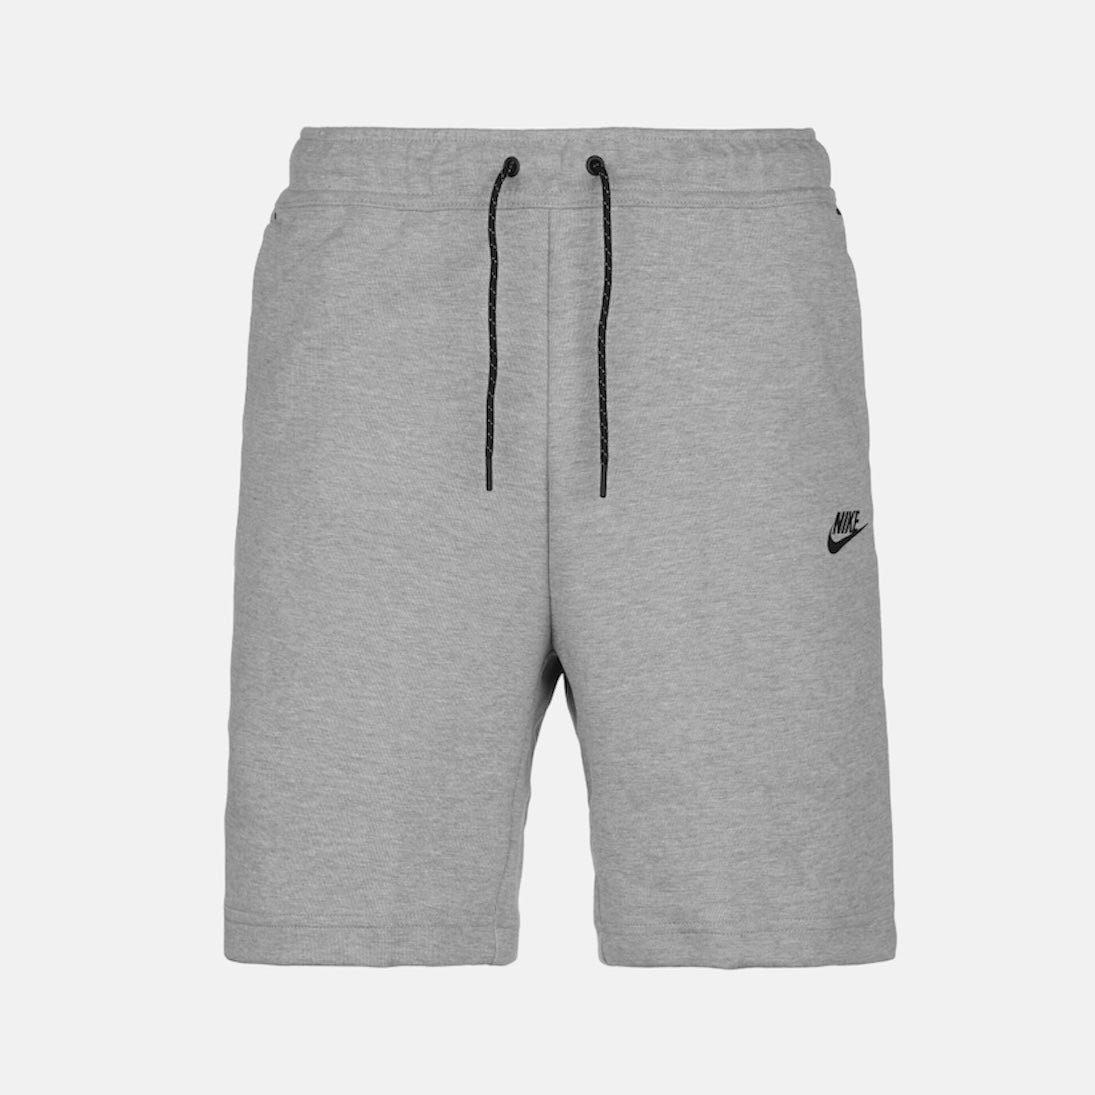 Nike Tech Fleece Shorts - Grey (3rd Gen - Old Season) - No Sauce The Plug